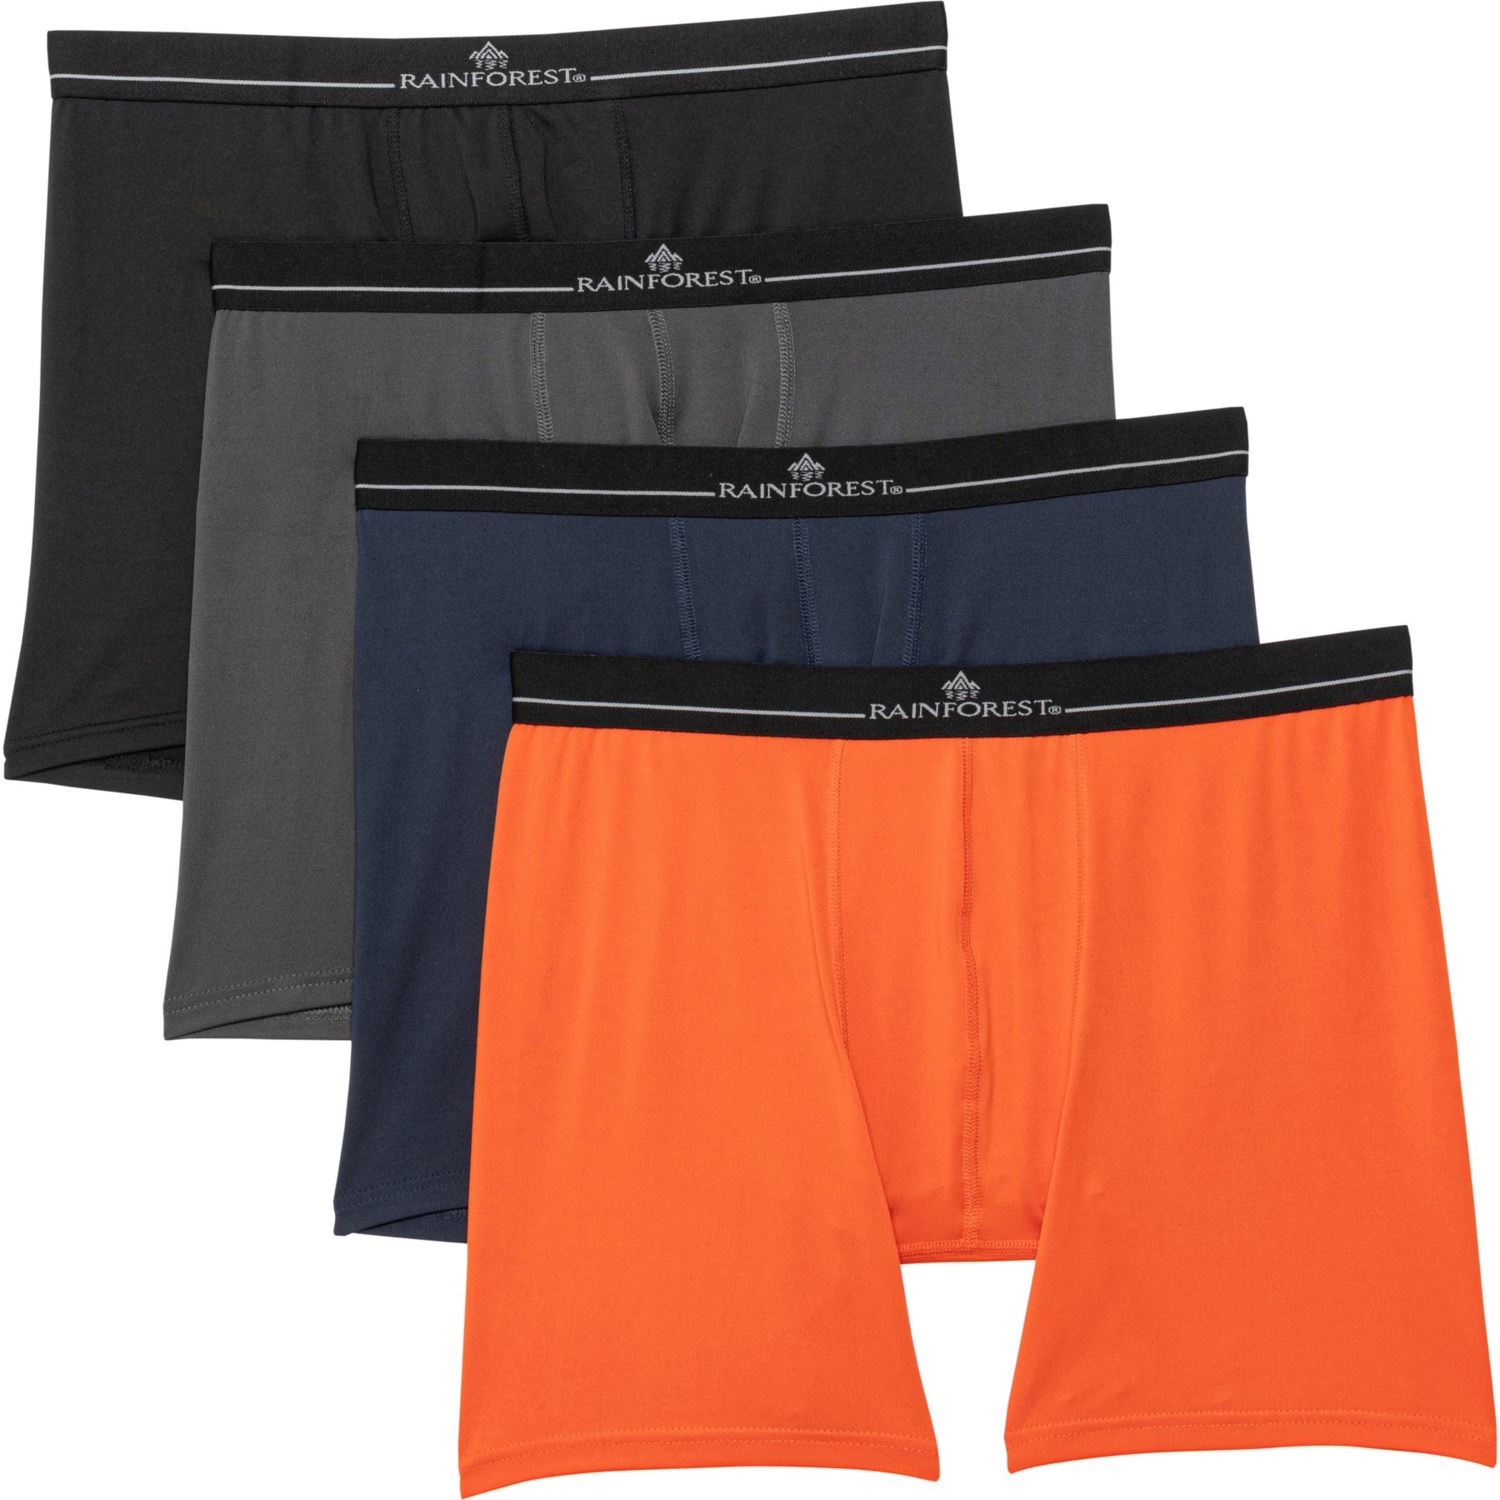 U.S. Polo Assn. Men's Underwear - Performance Boxer Briefs (6 Pack